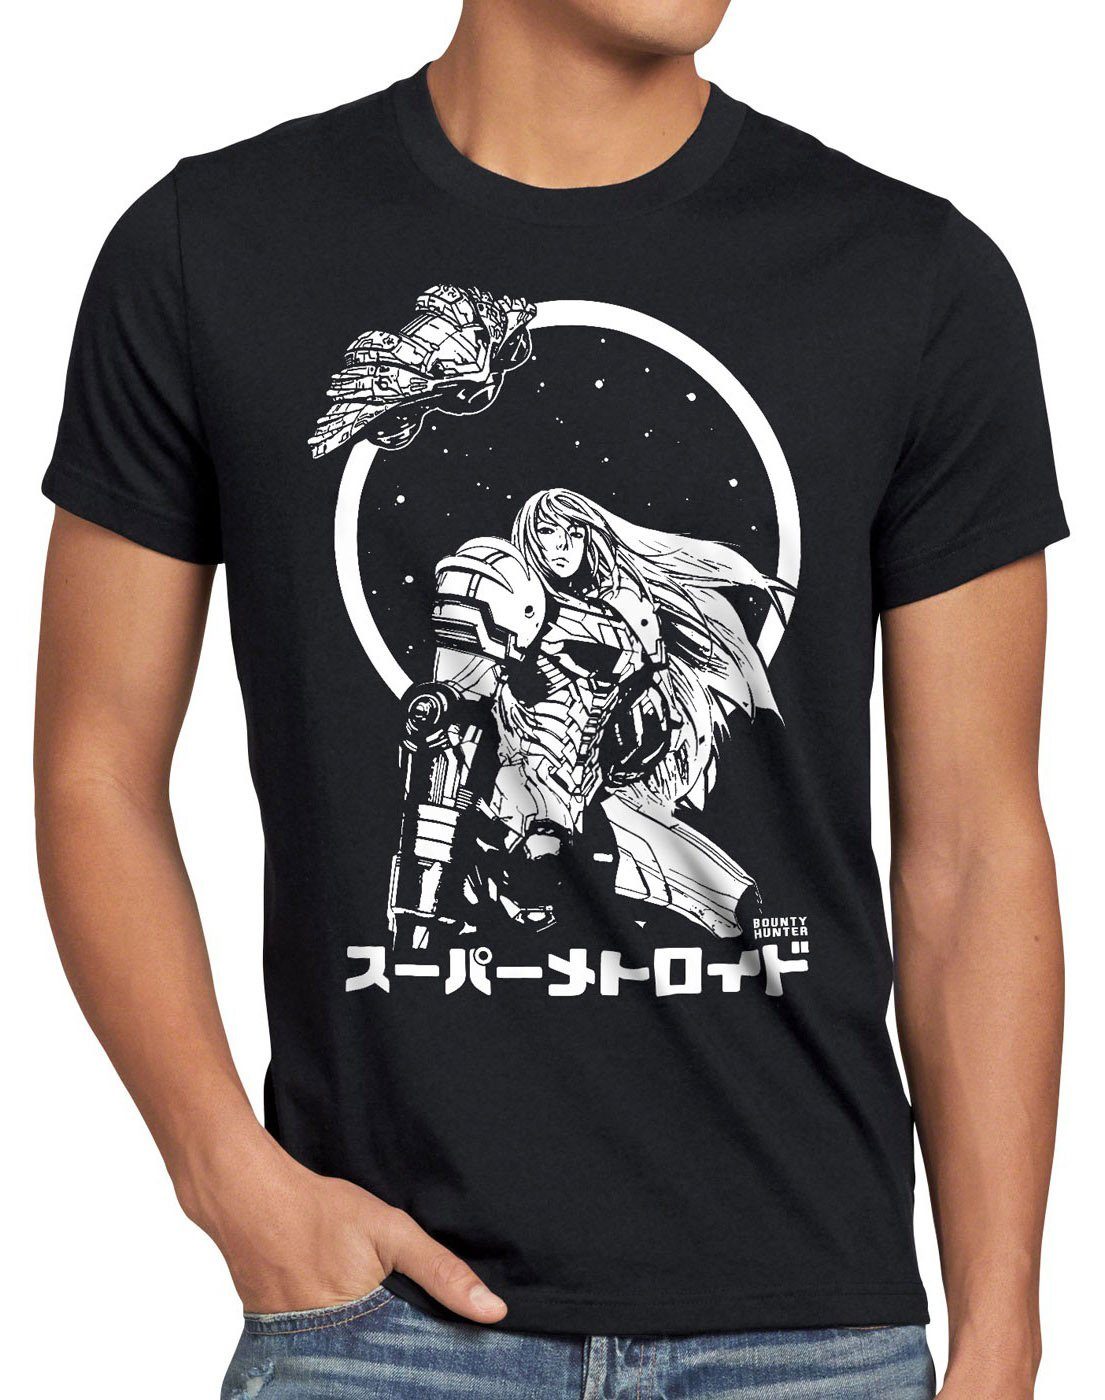 style3 Print-Shirt Herren T-Shirt Samus Return metroid nerd gamer nes snes geek